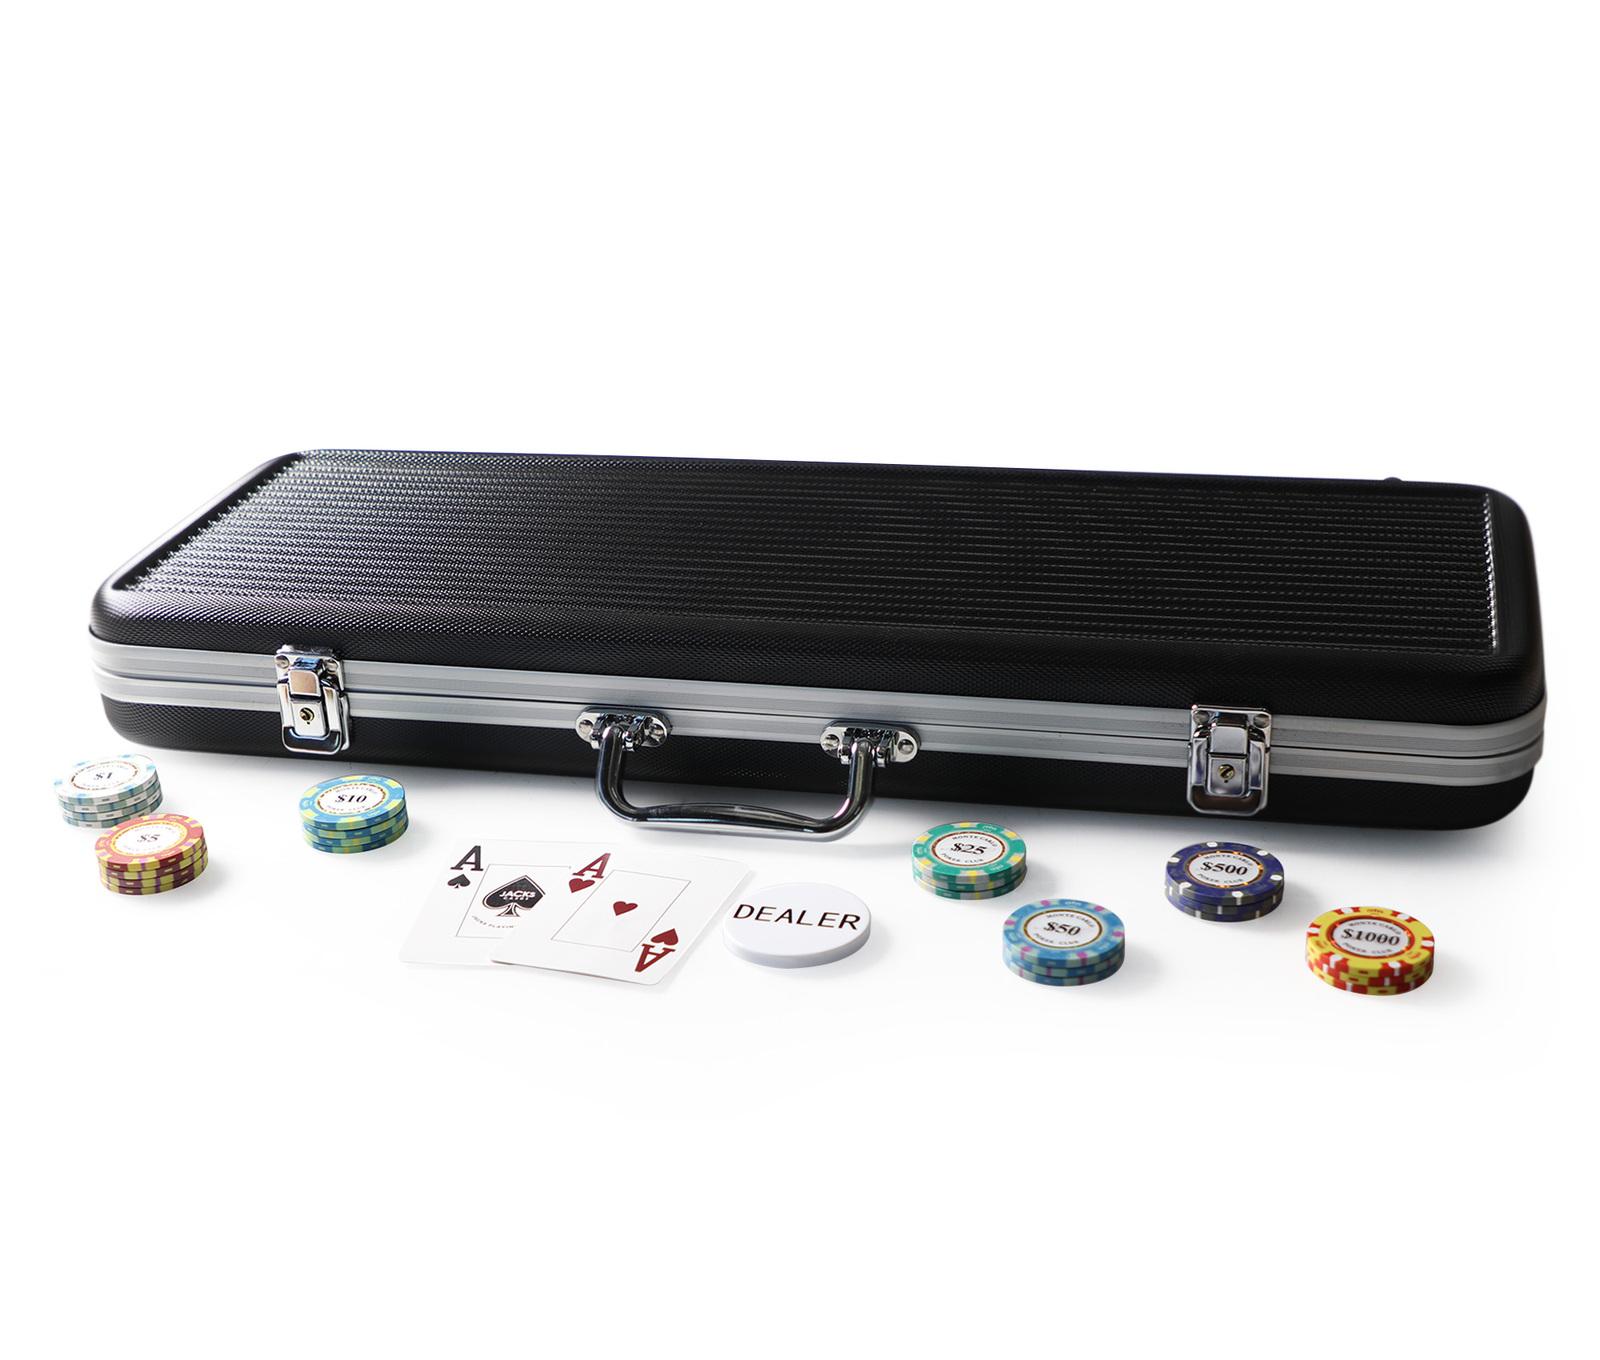 NEW Blackstone 500 chip Poker set in Black Executive case